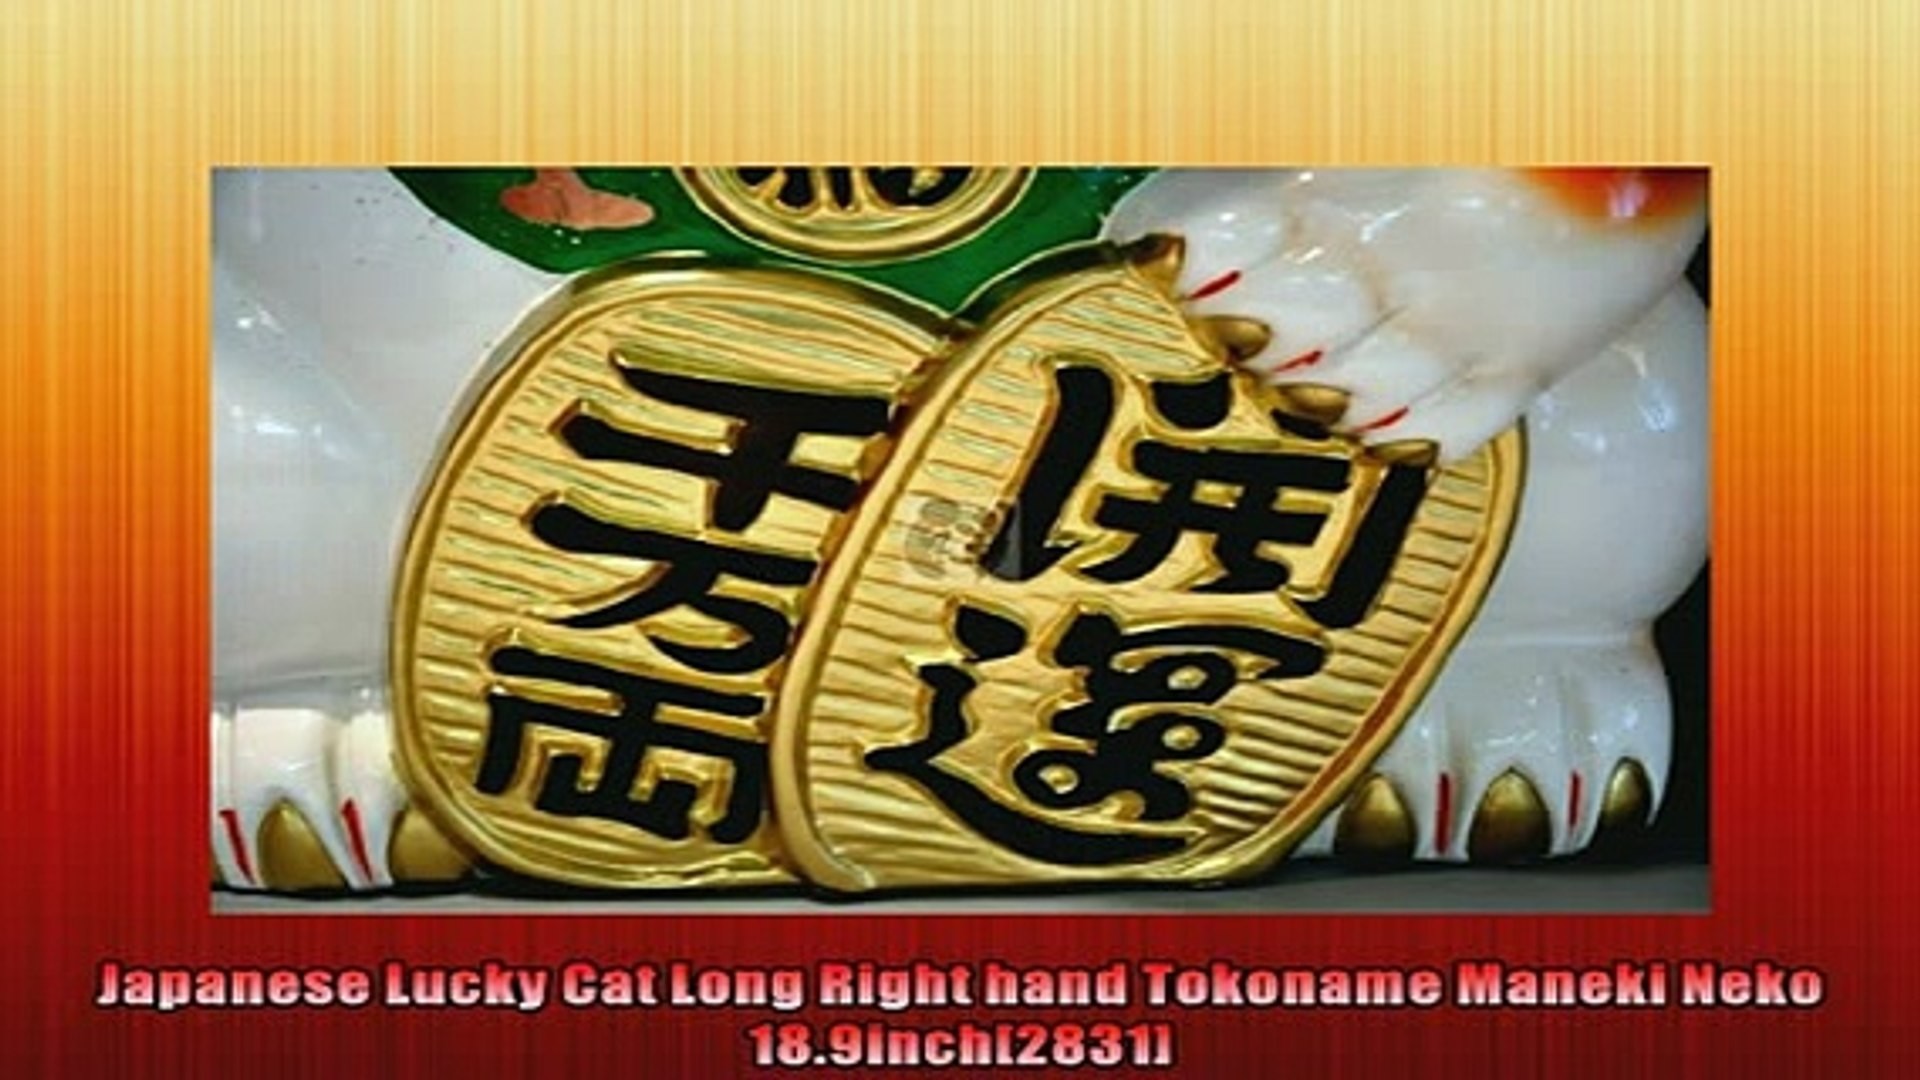 1920x1080 Most popular Japanese Lucky Cat Long Right hand Tokoname Maneki Neko  189inch2831 - Video Dailymotion